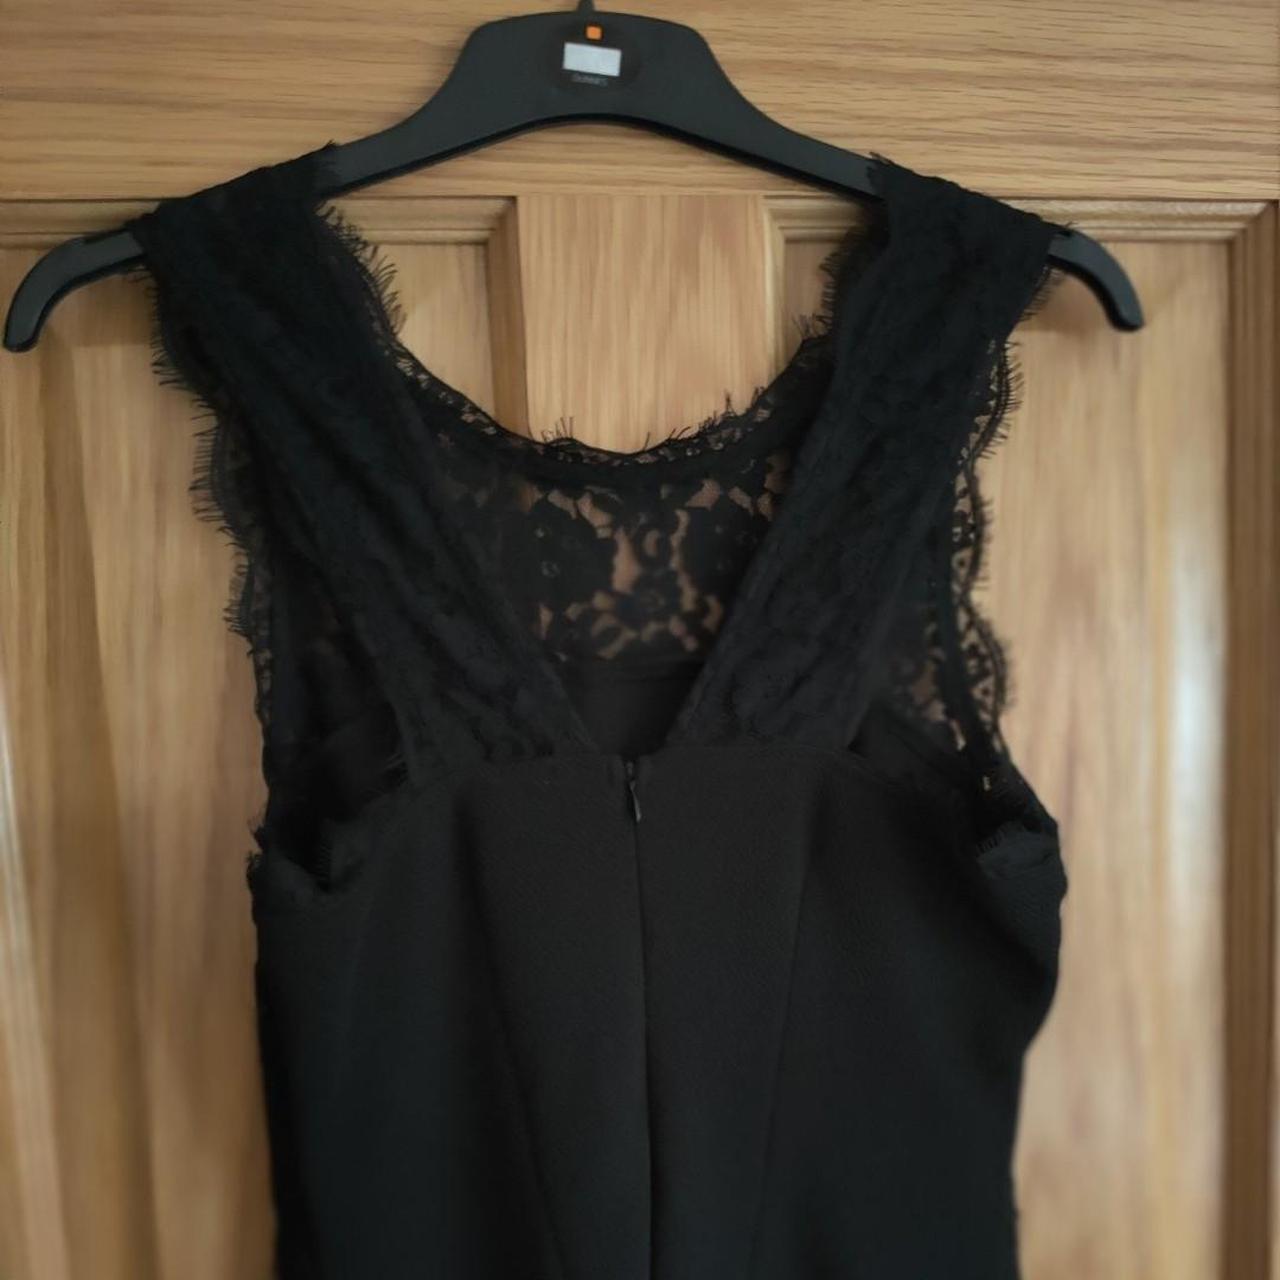 Black lace dress Formal attire/ wedding guest dress - Depop